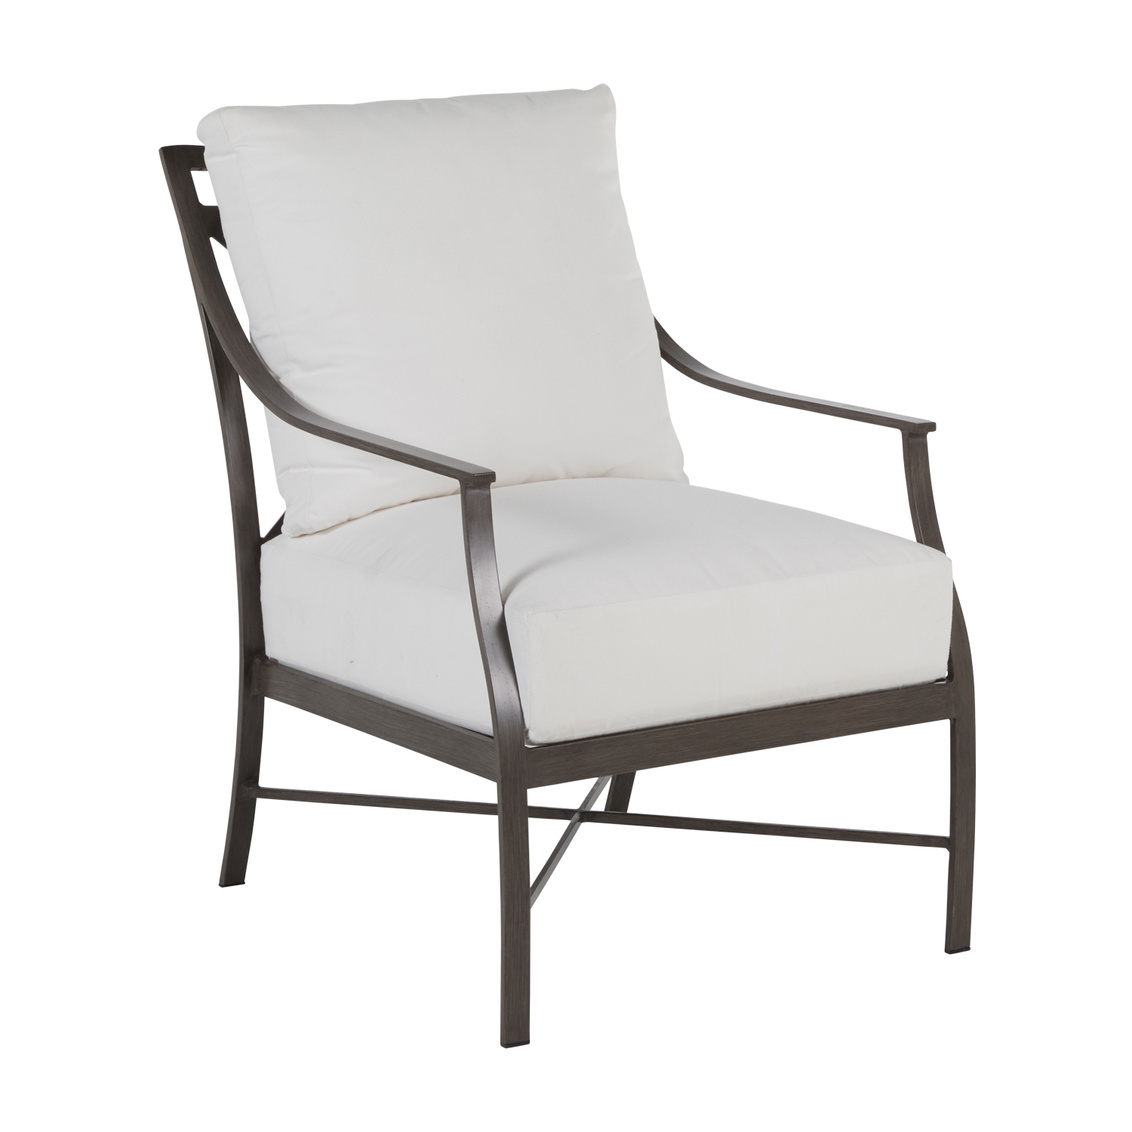 monaco aluminum lounge in slate grey – frame only product image